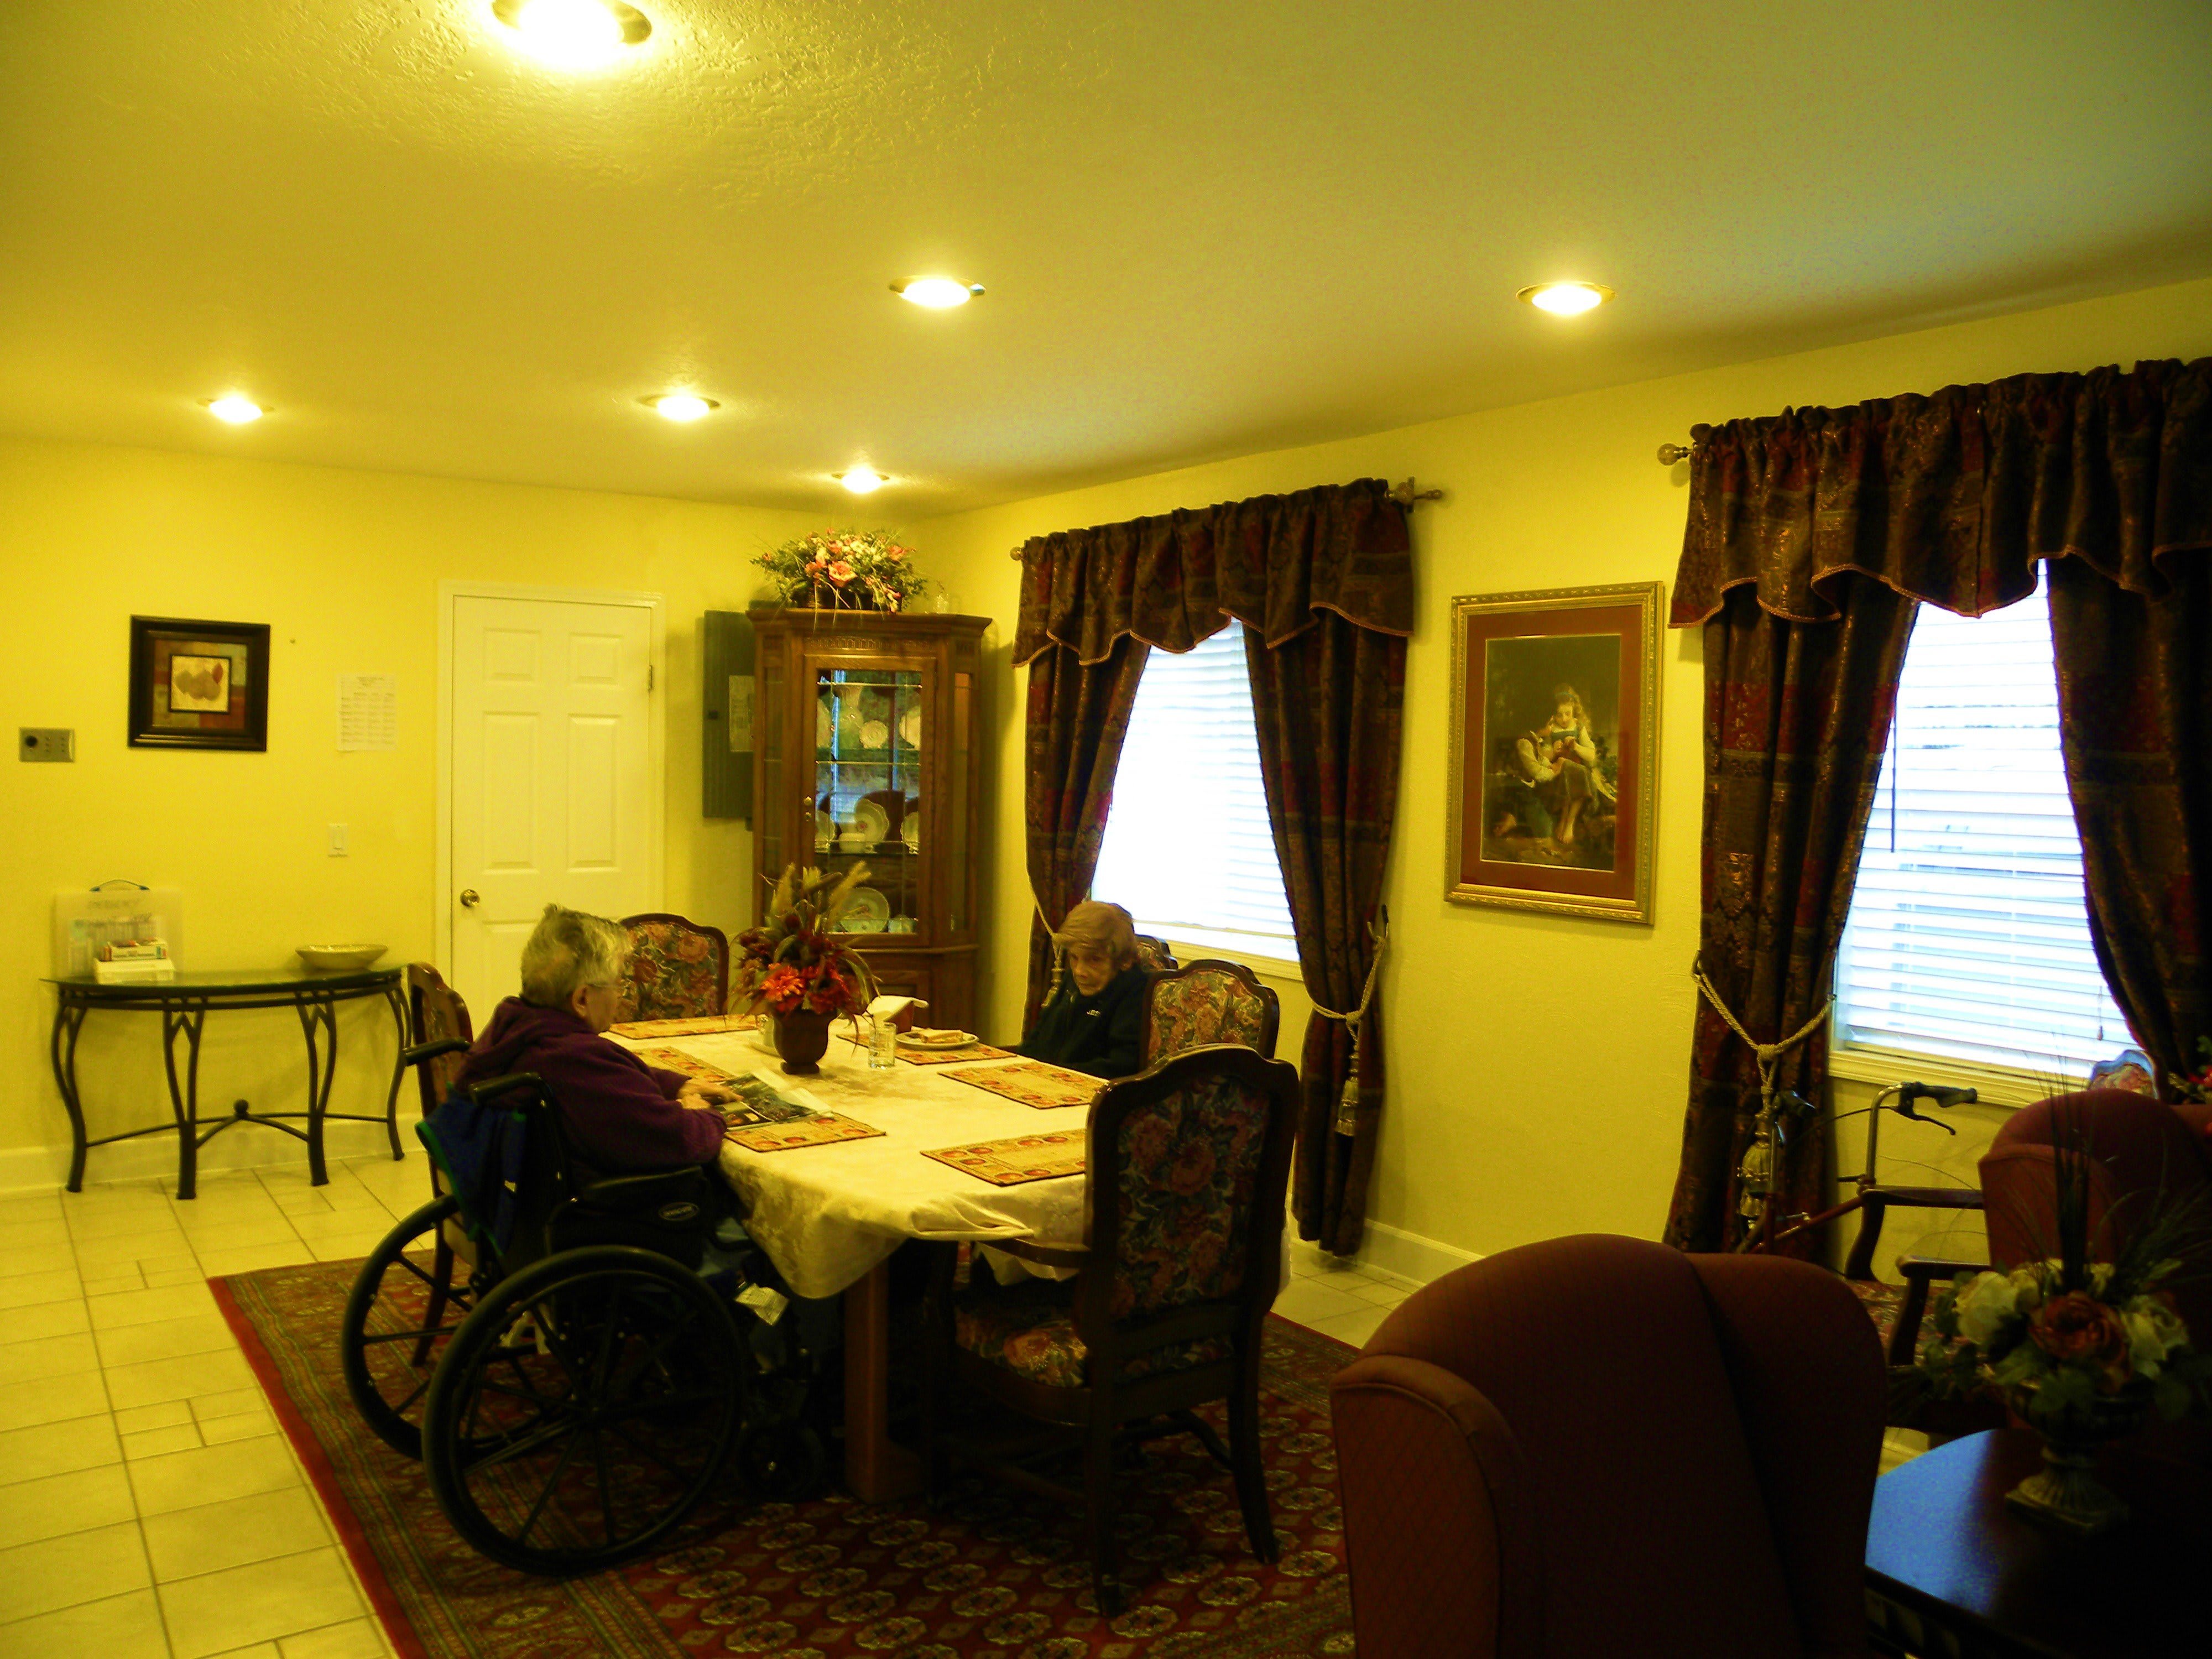 Longevity Home Care